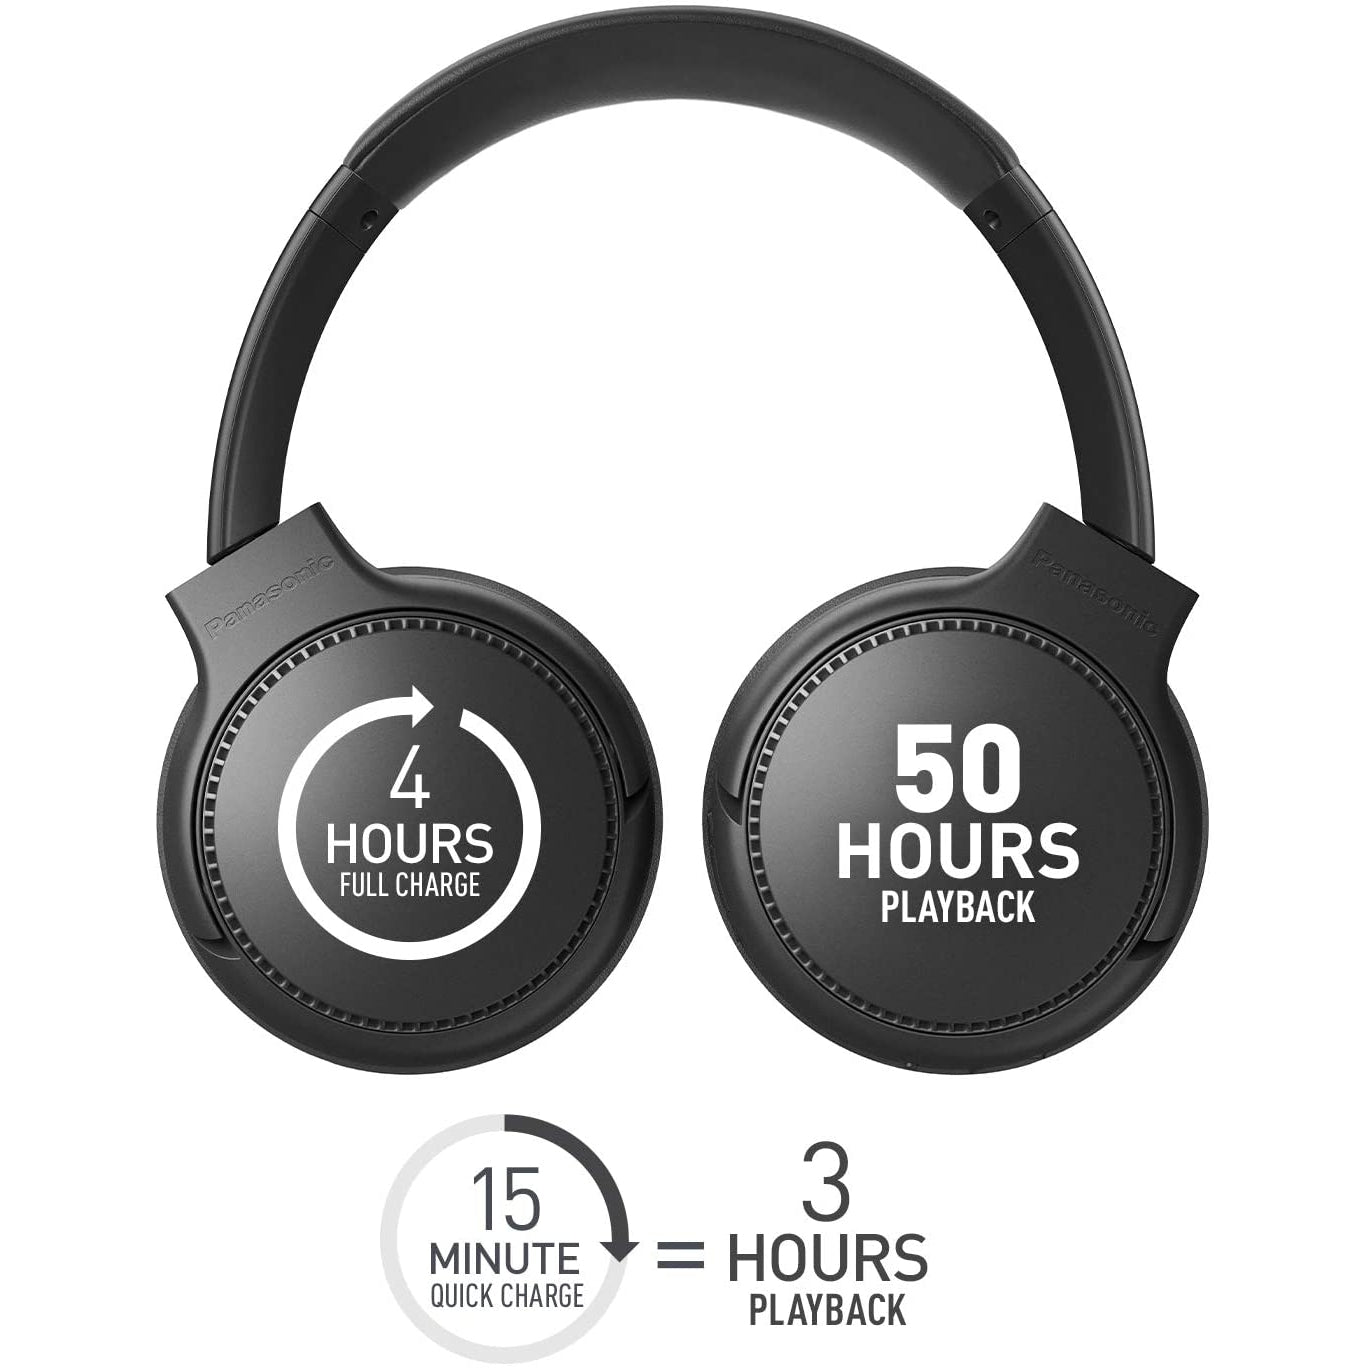 Panasonic RB-M300BE-K Deep Bass Wireless Bluetooth Overhead Headphones - Black